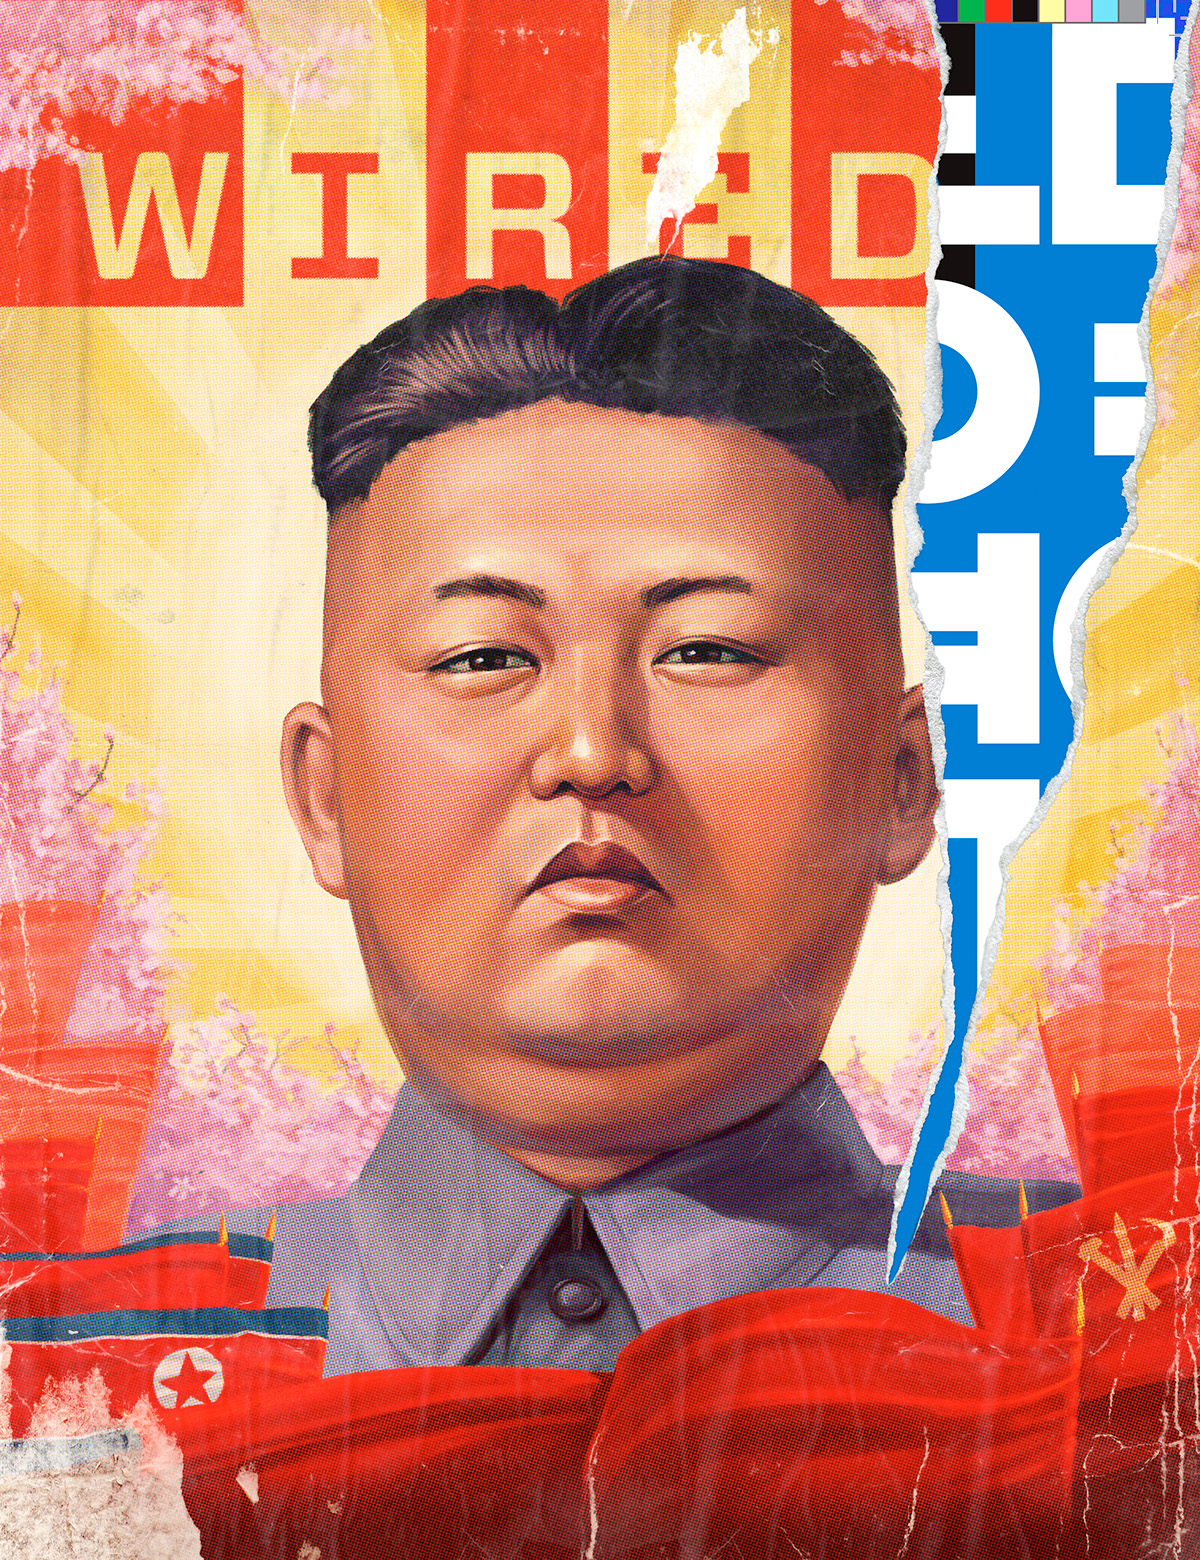 Wired north korea Tyrant regime freedom revolution Propaganda Distress poster publishing   magazine Kim jong un american piracy